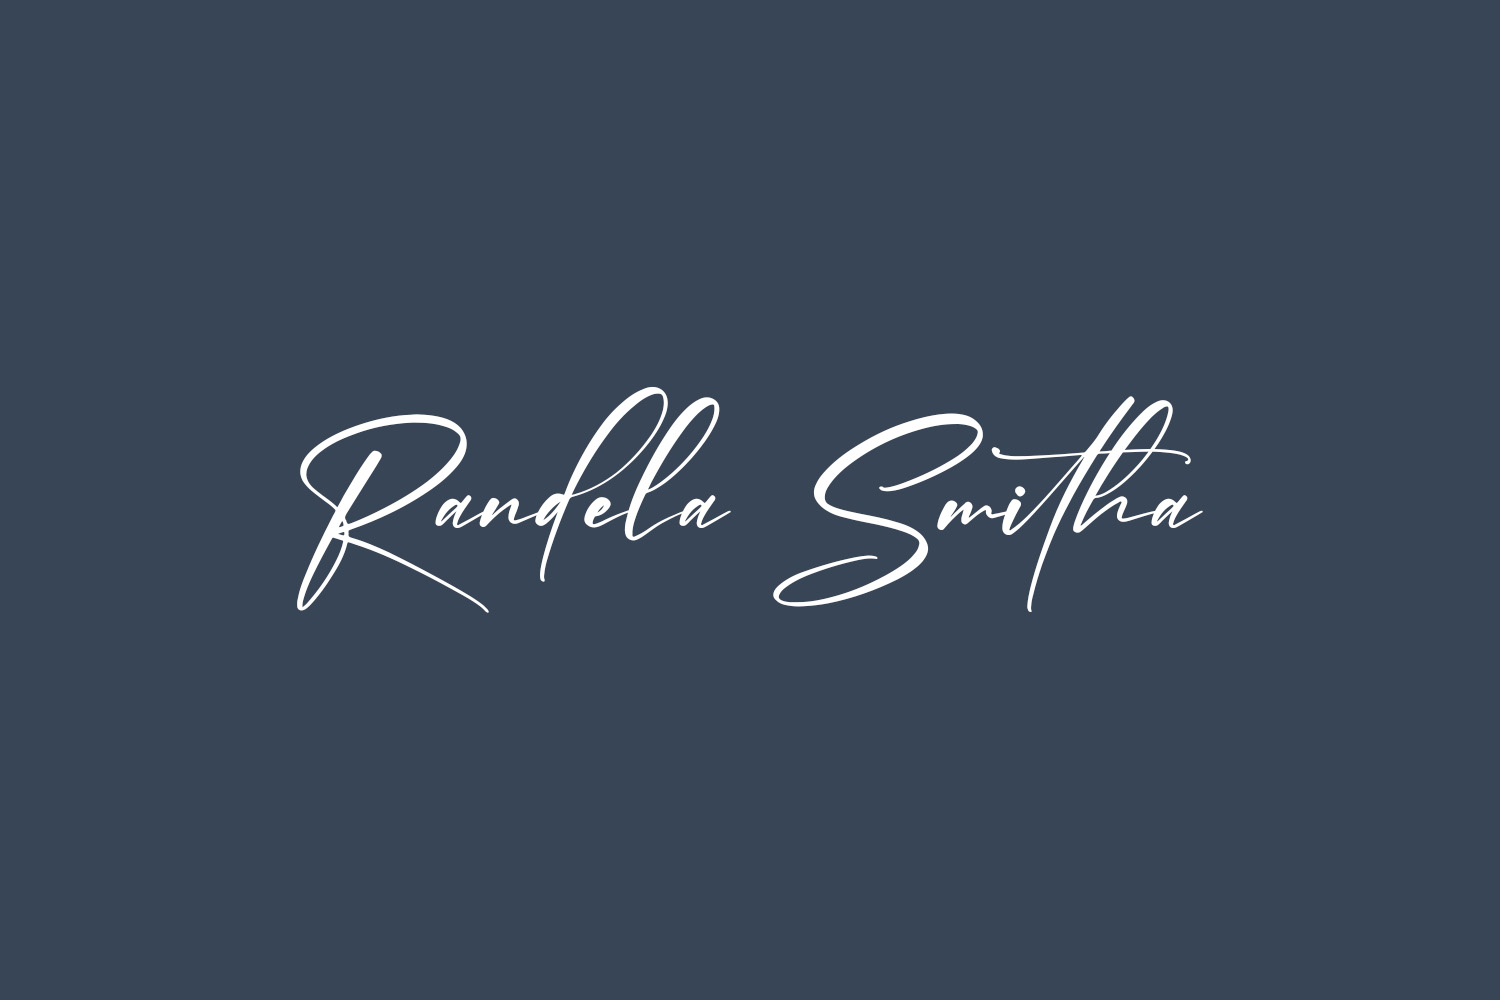 Randela Smitha Free Font